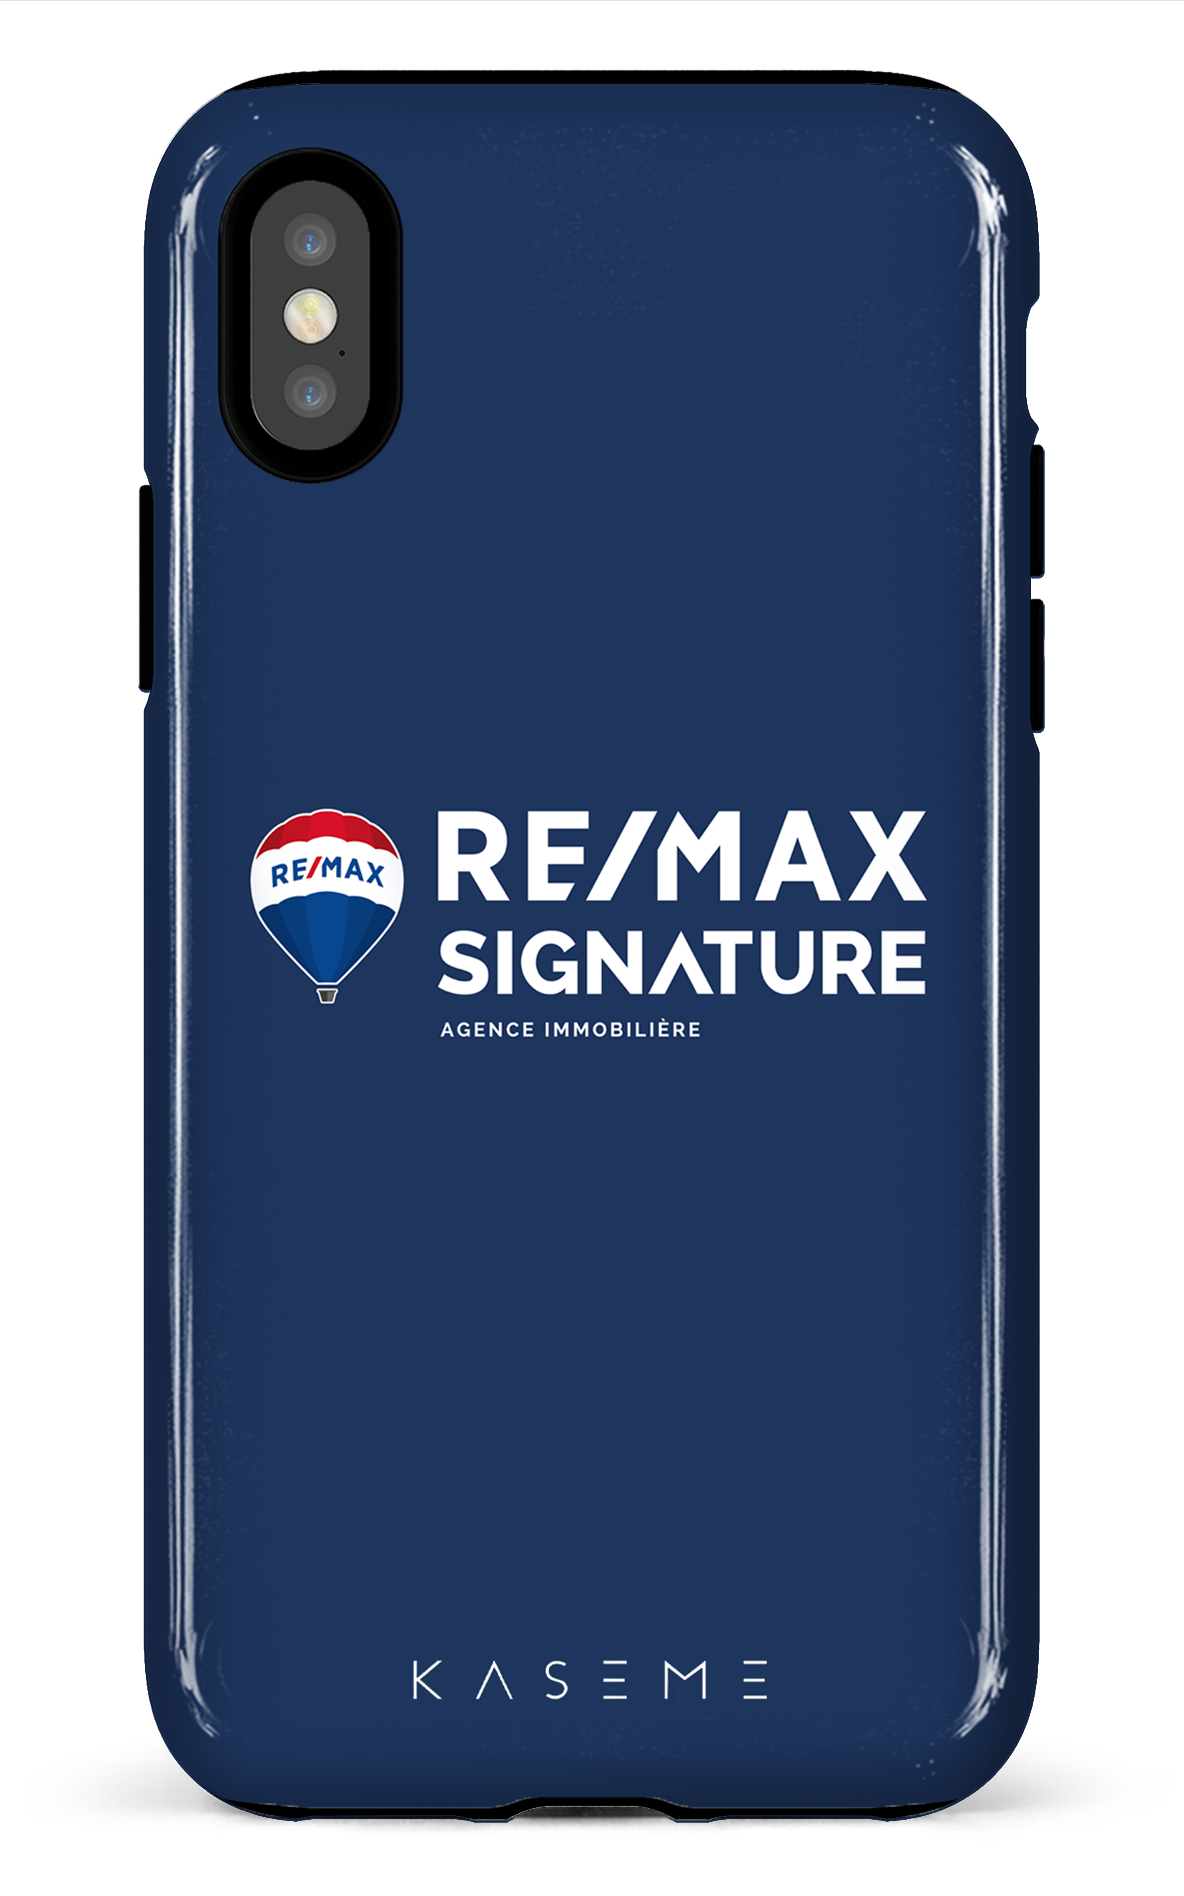 Remax Signature Bleu - iPhone X/XS